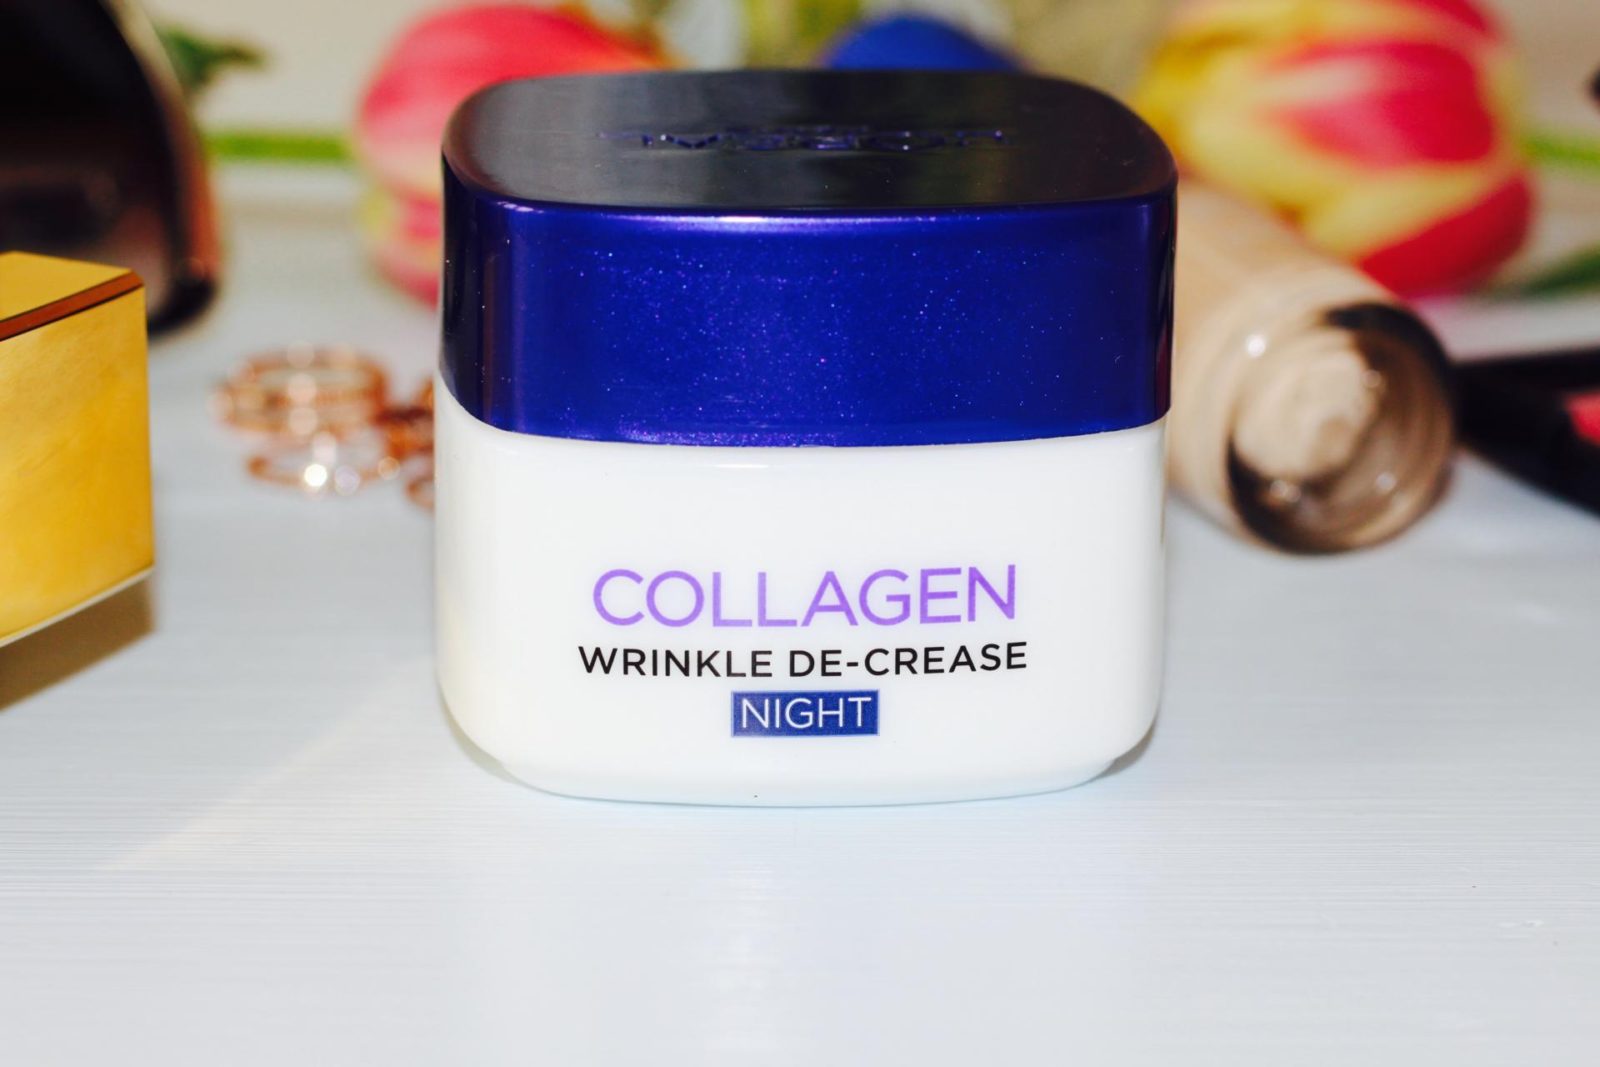 L'Oreal Collagen Wrinkle De-Crease